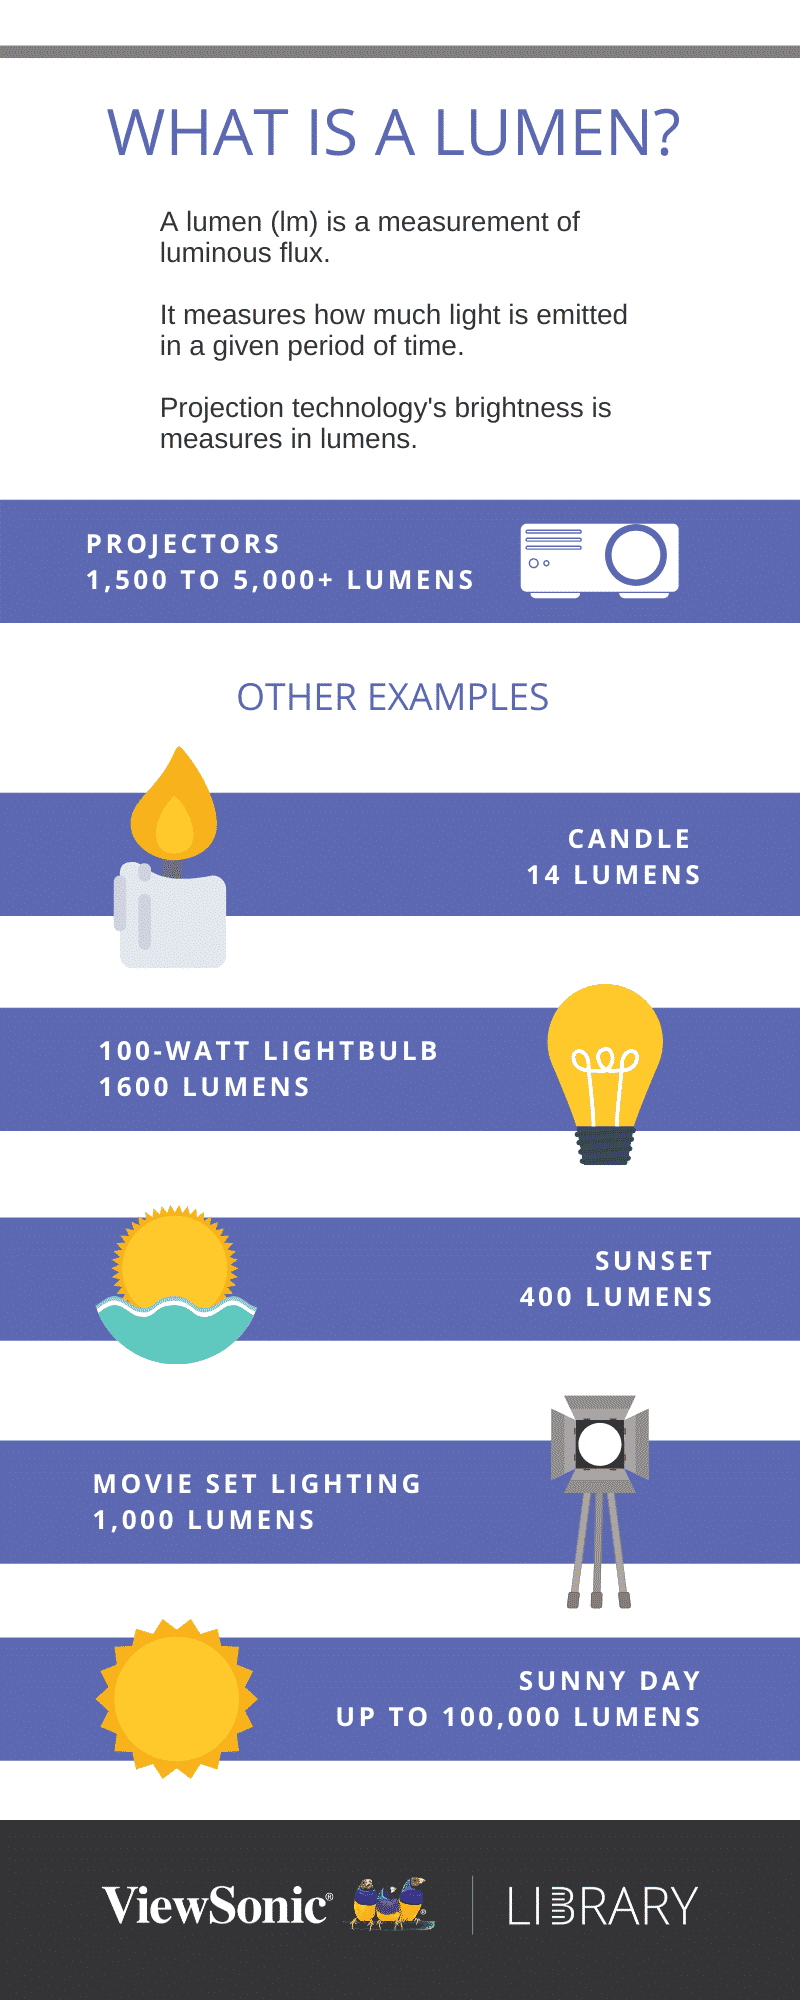 What is a lumen?